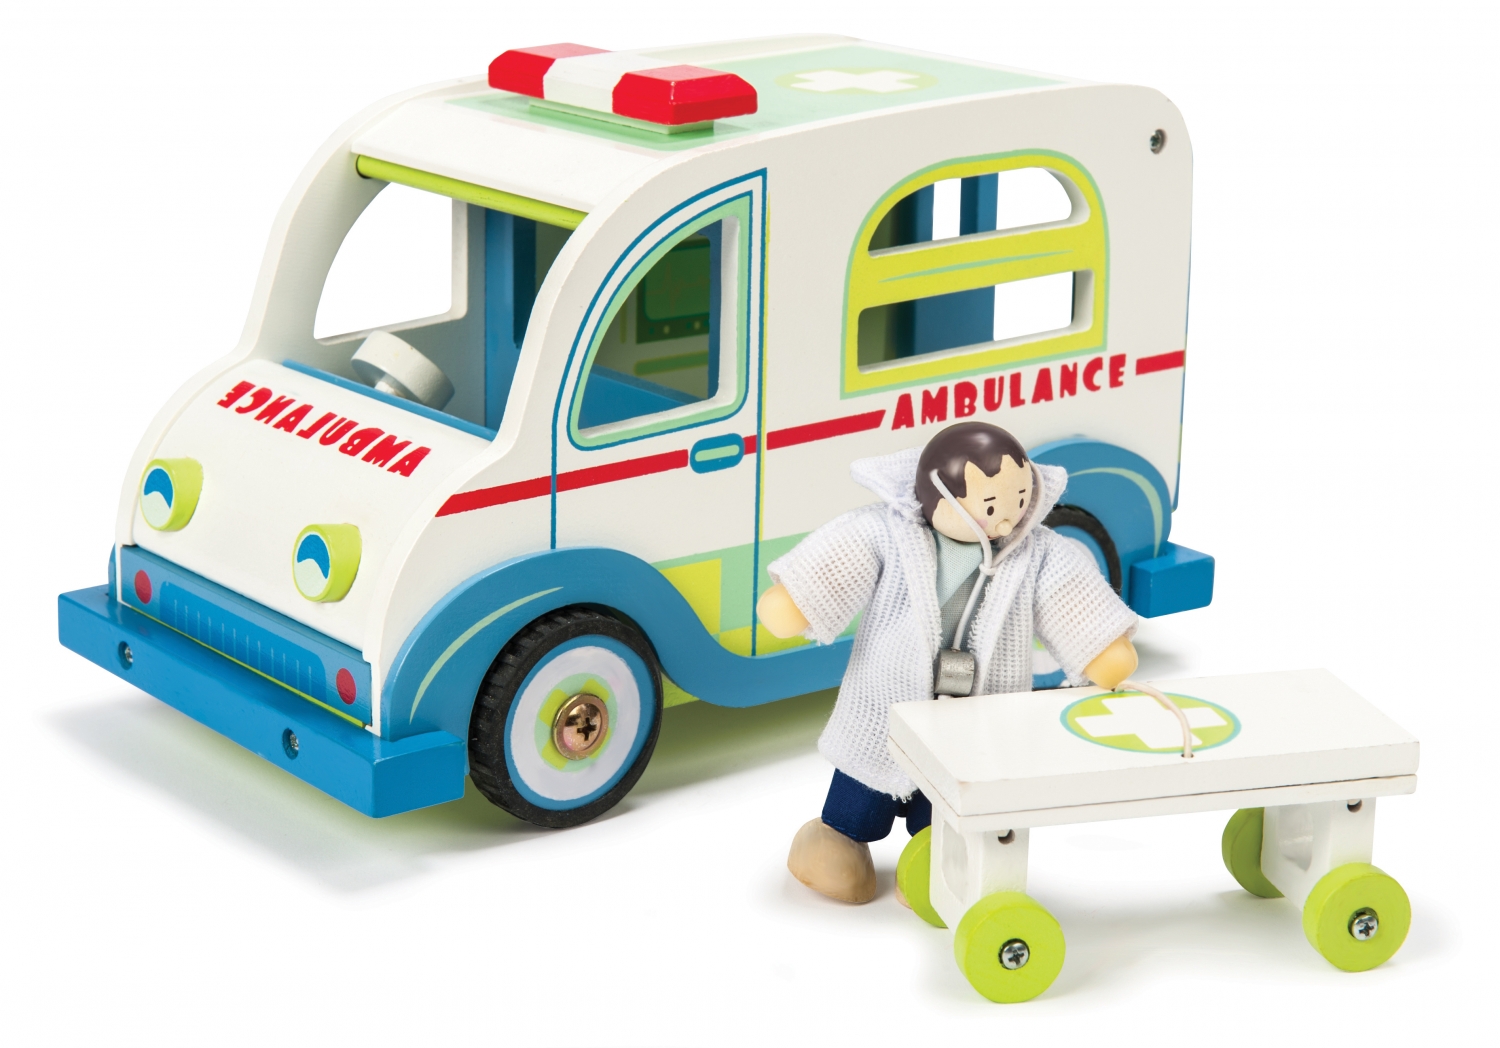 Modderig Helder op Omleiding Prachtige houten ambulance set!